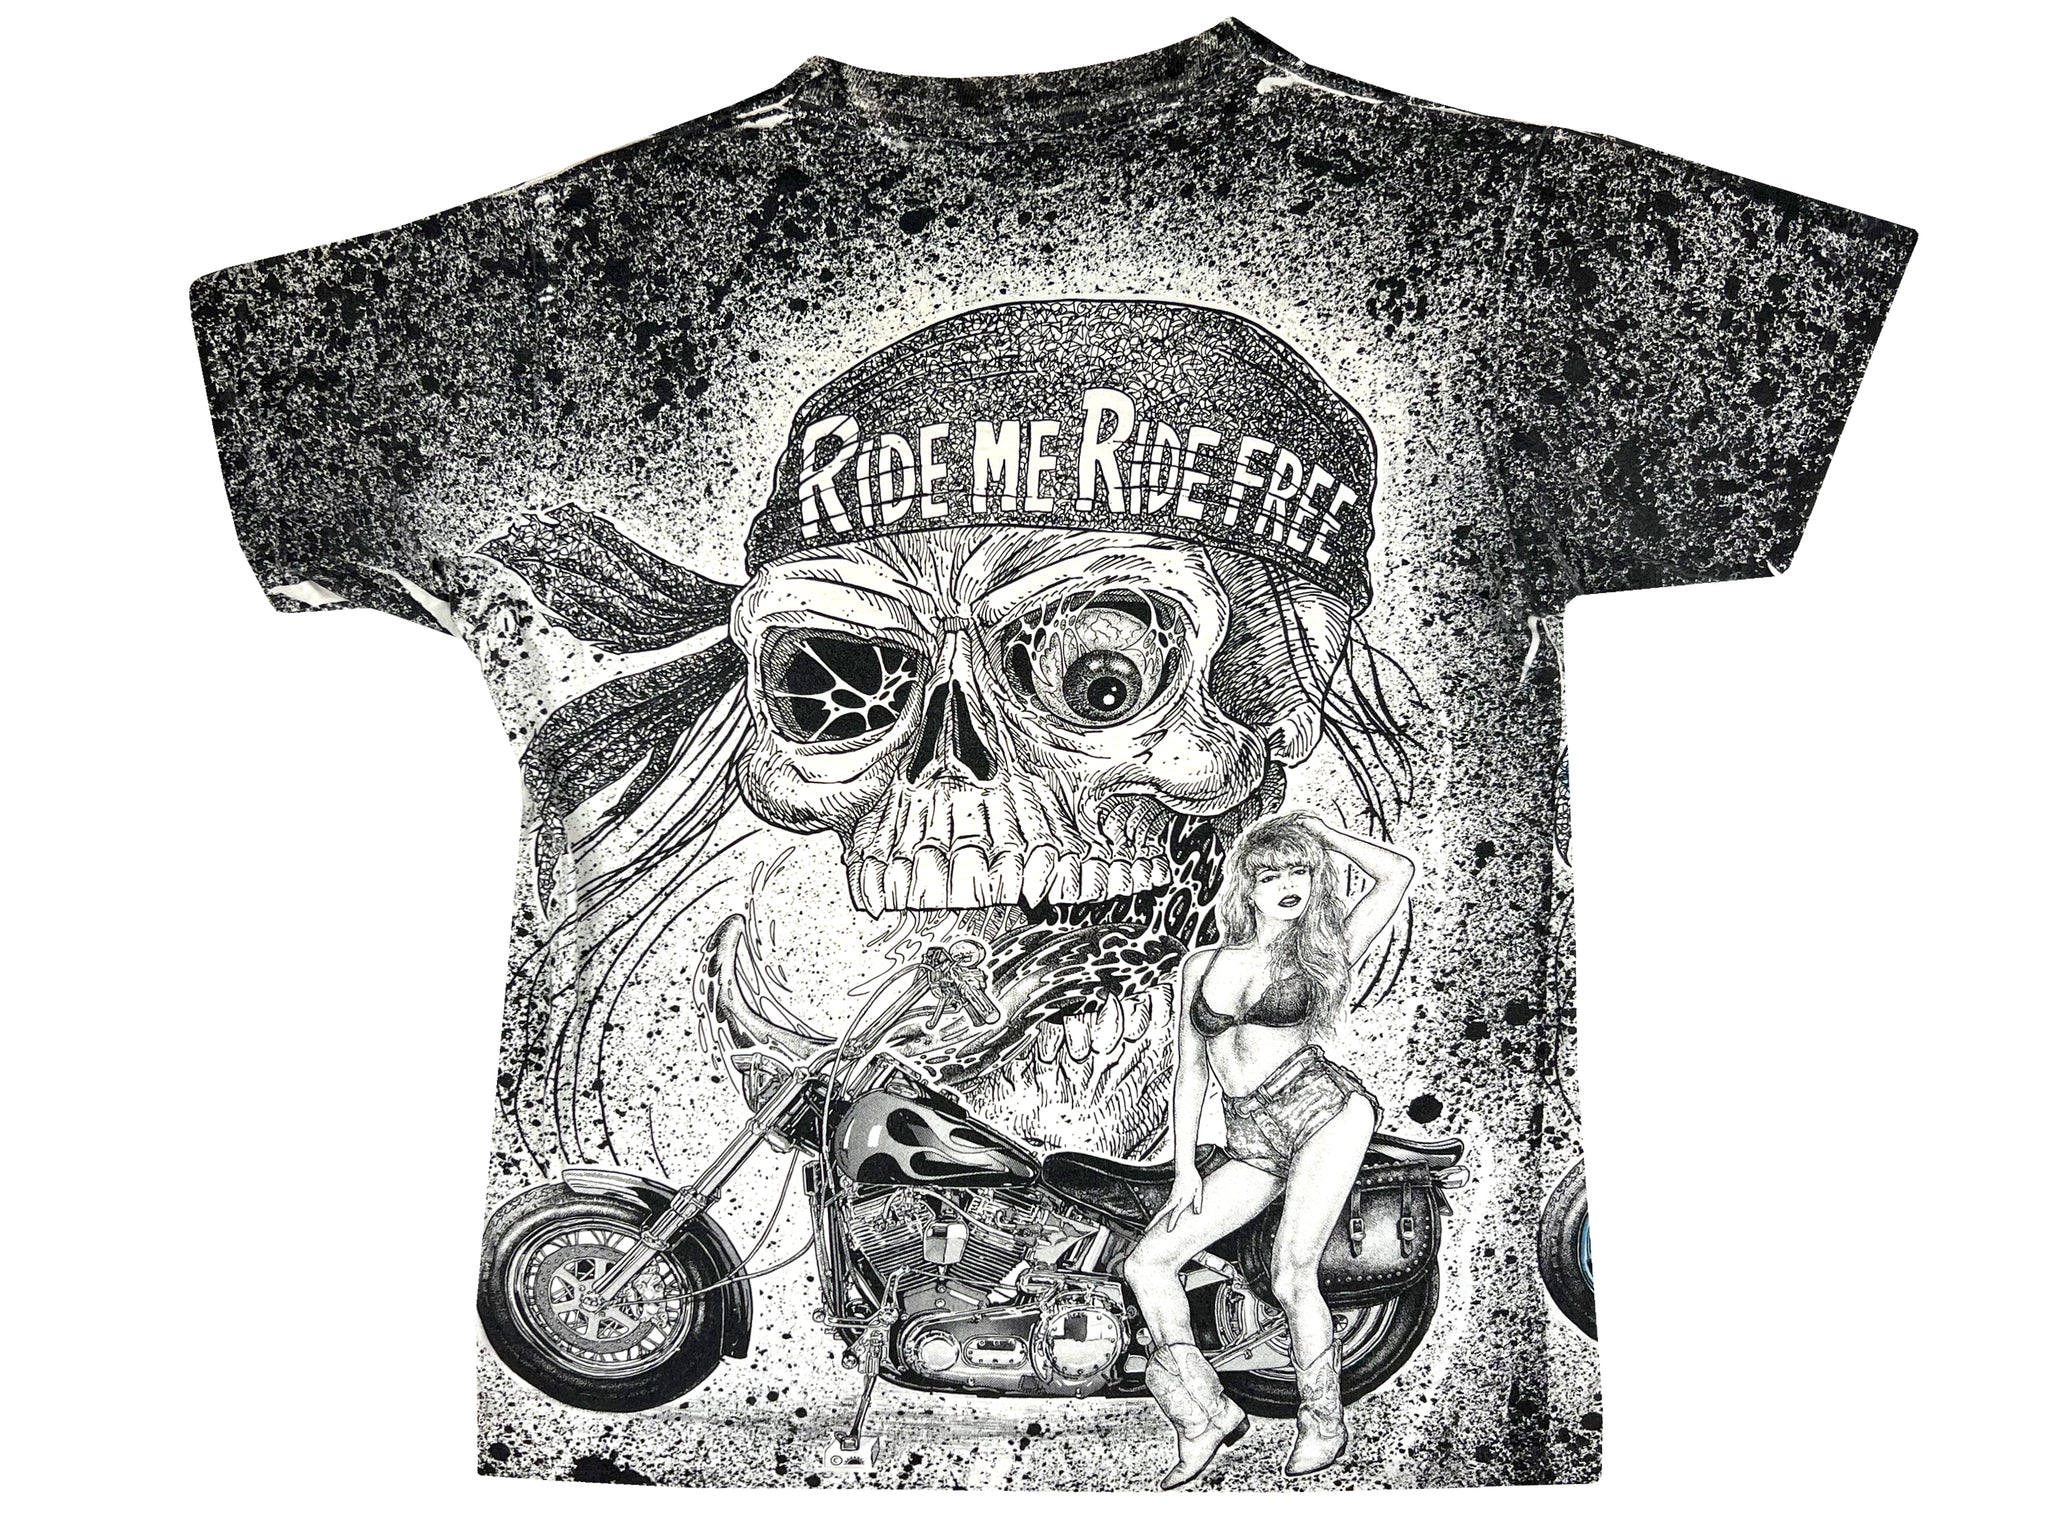 Ride Me Ride Free All Over Print T-Shirto